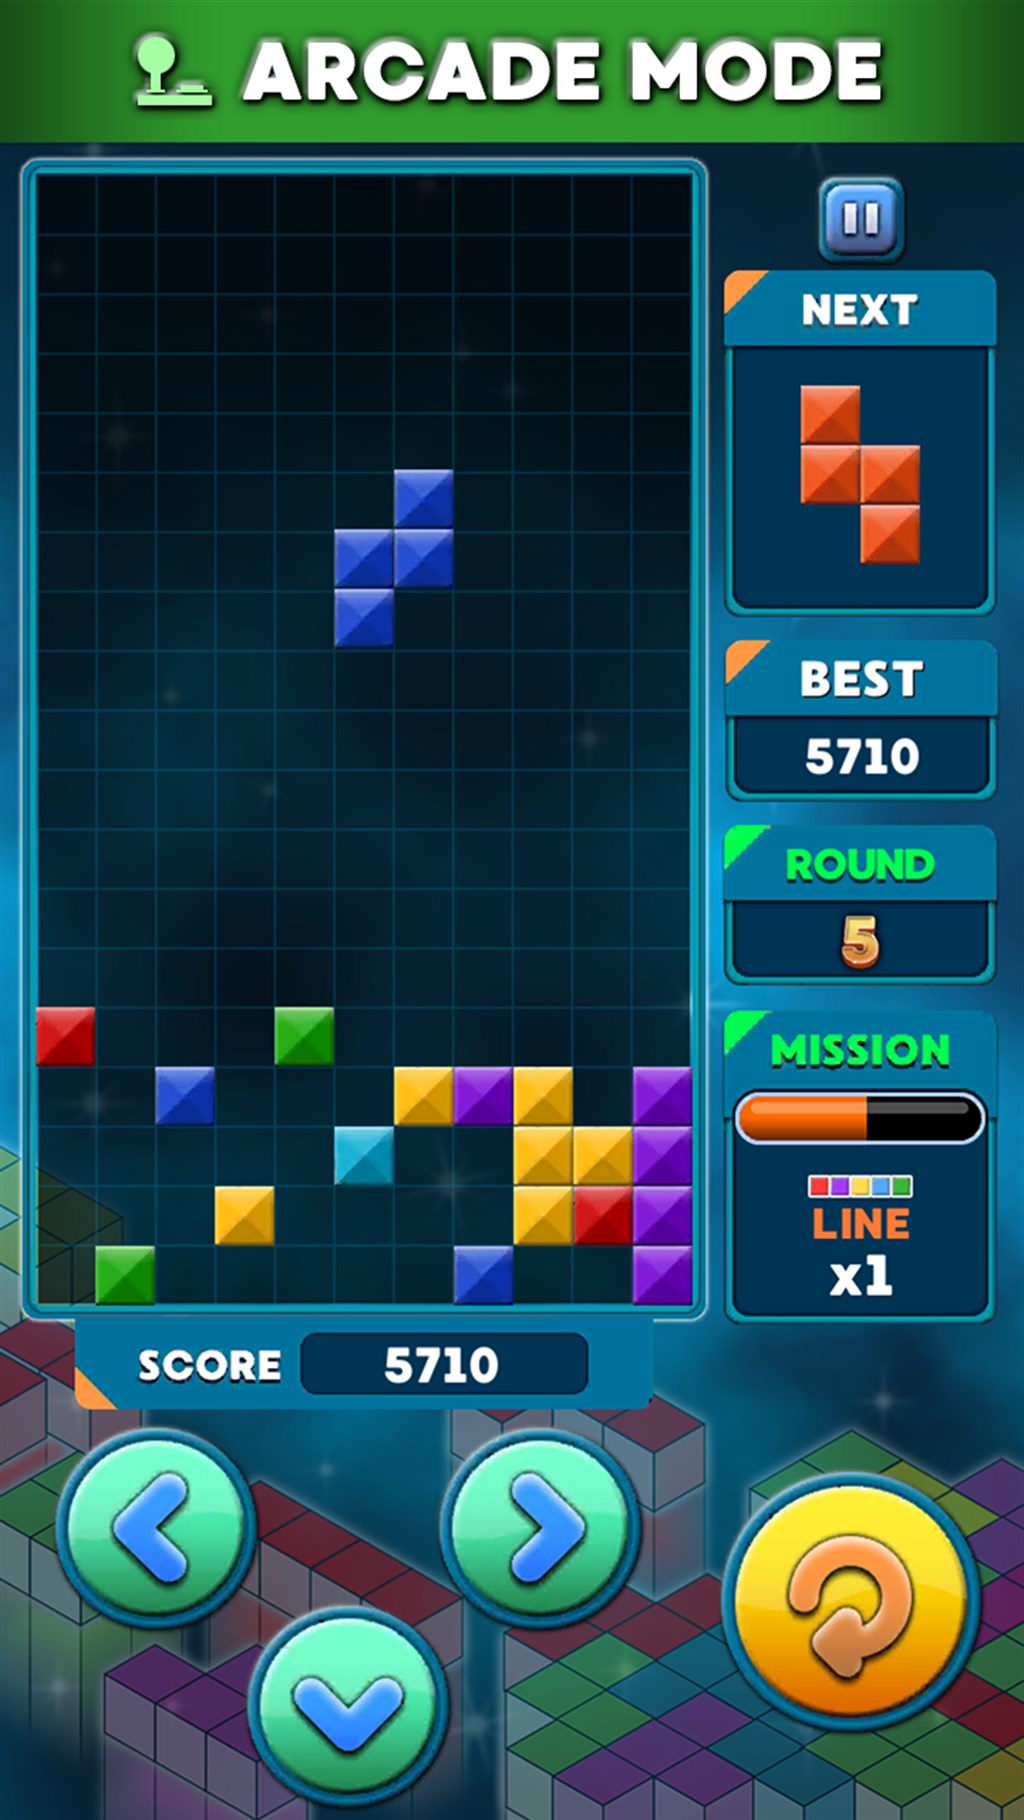 Tetris Screenshot Image